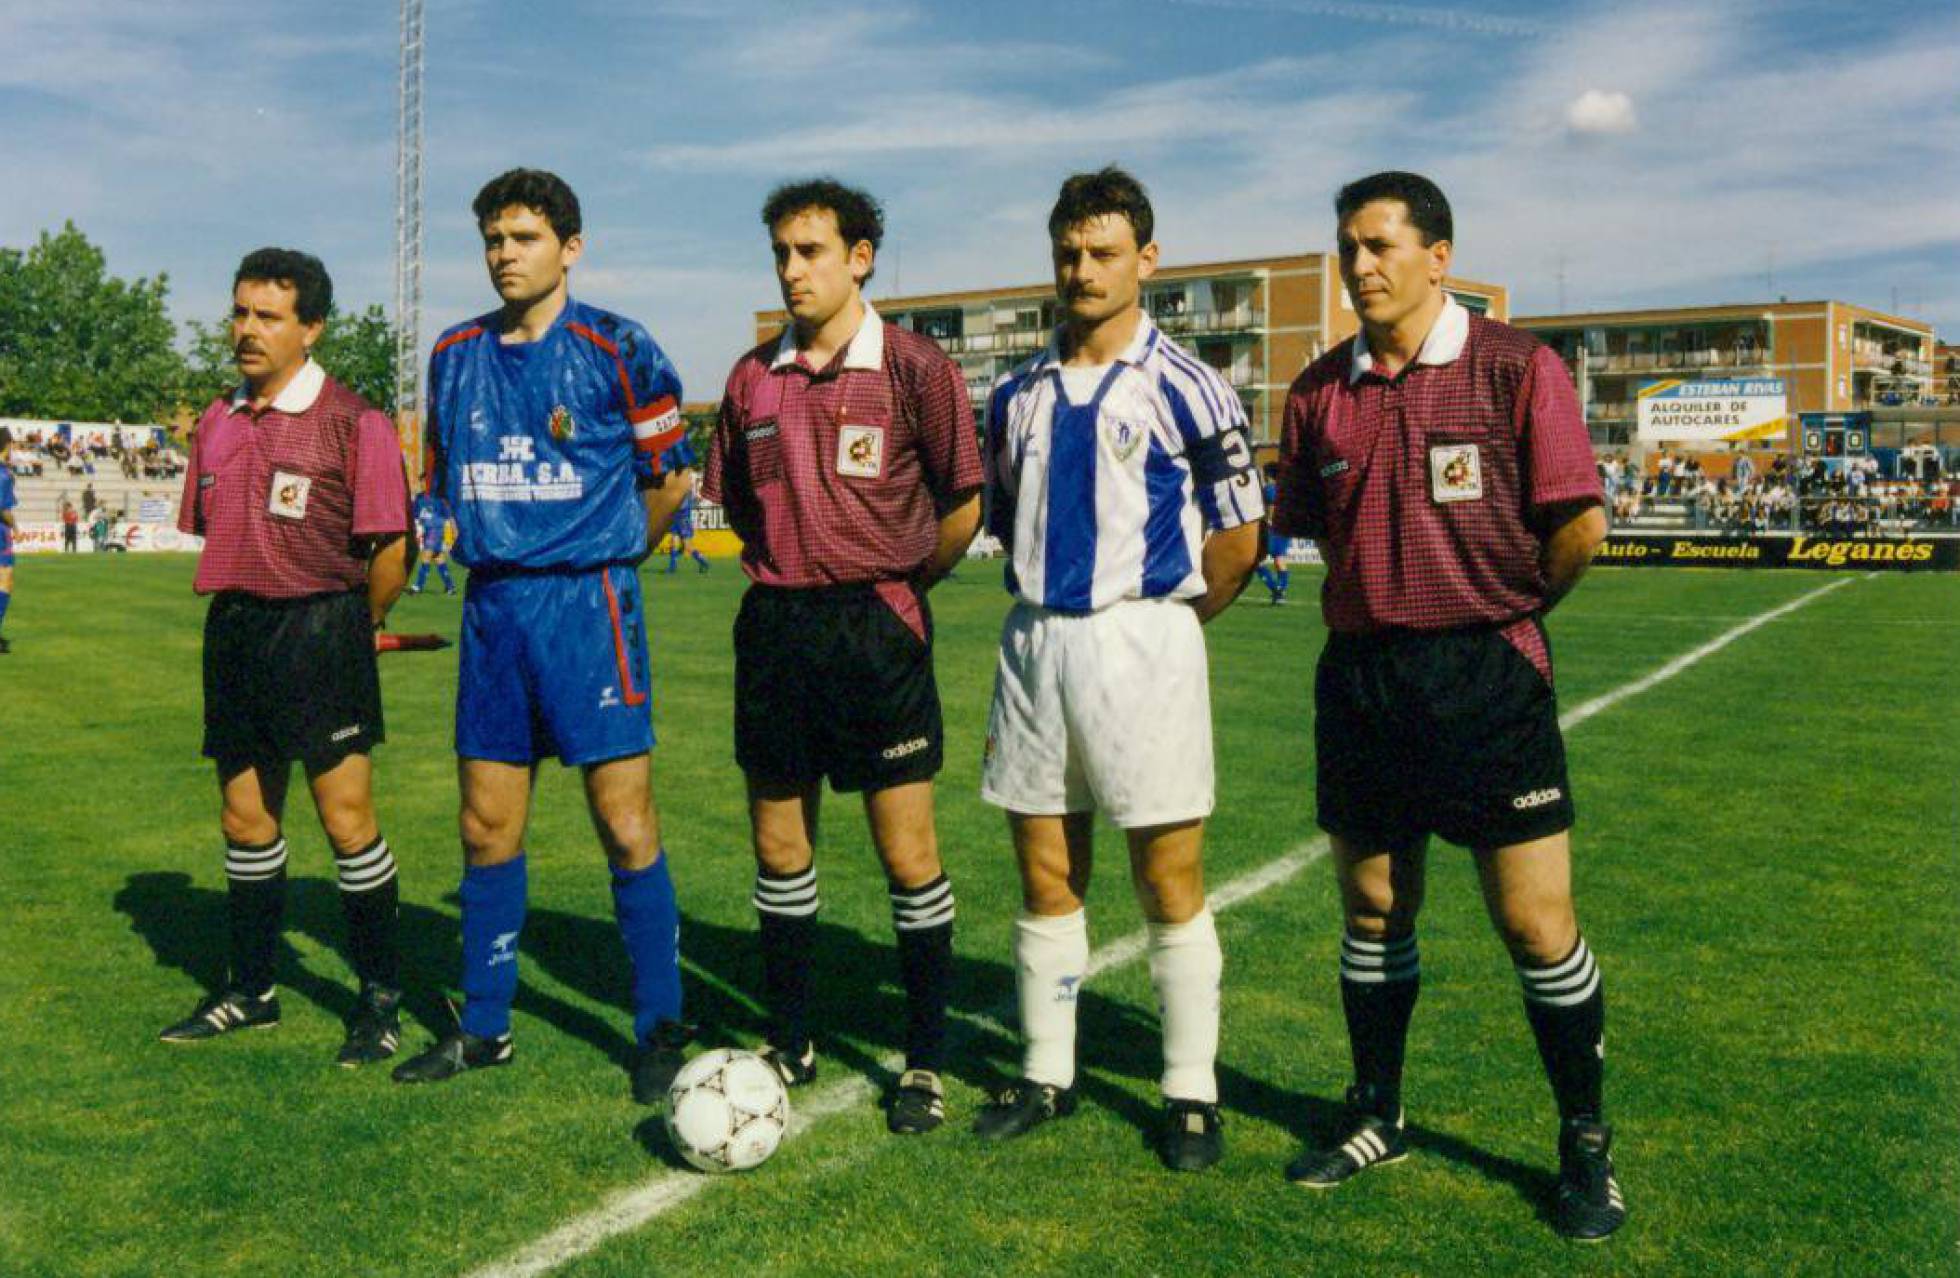 CD Leganés-Getafe, one derby in the world